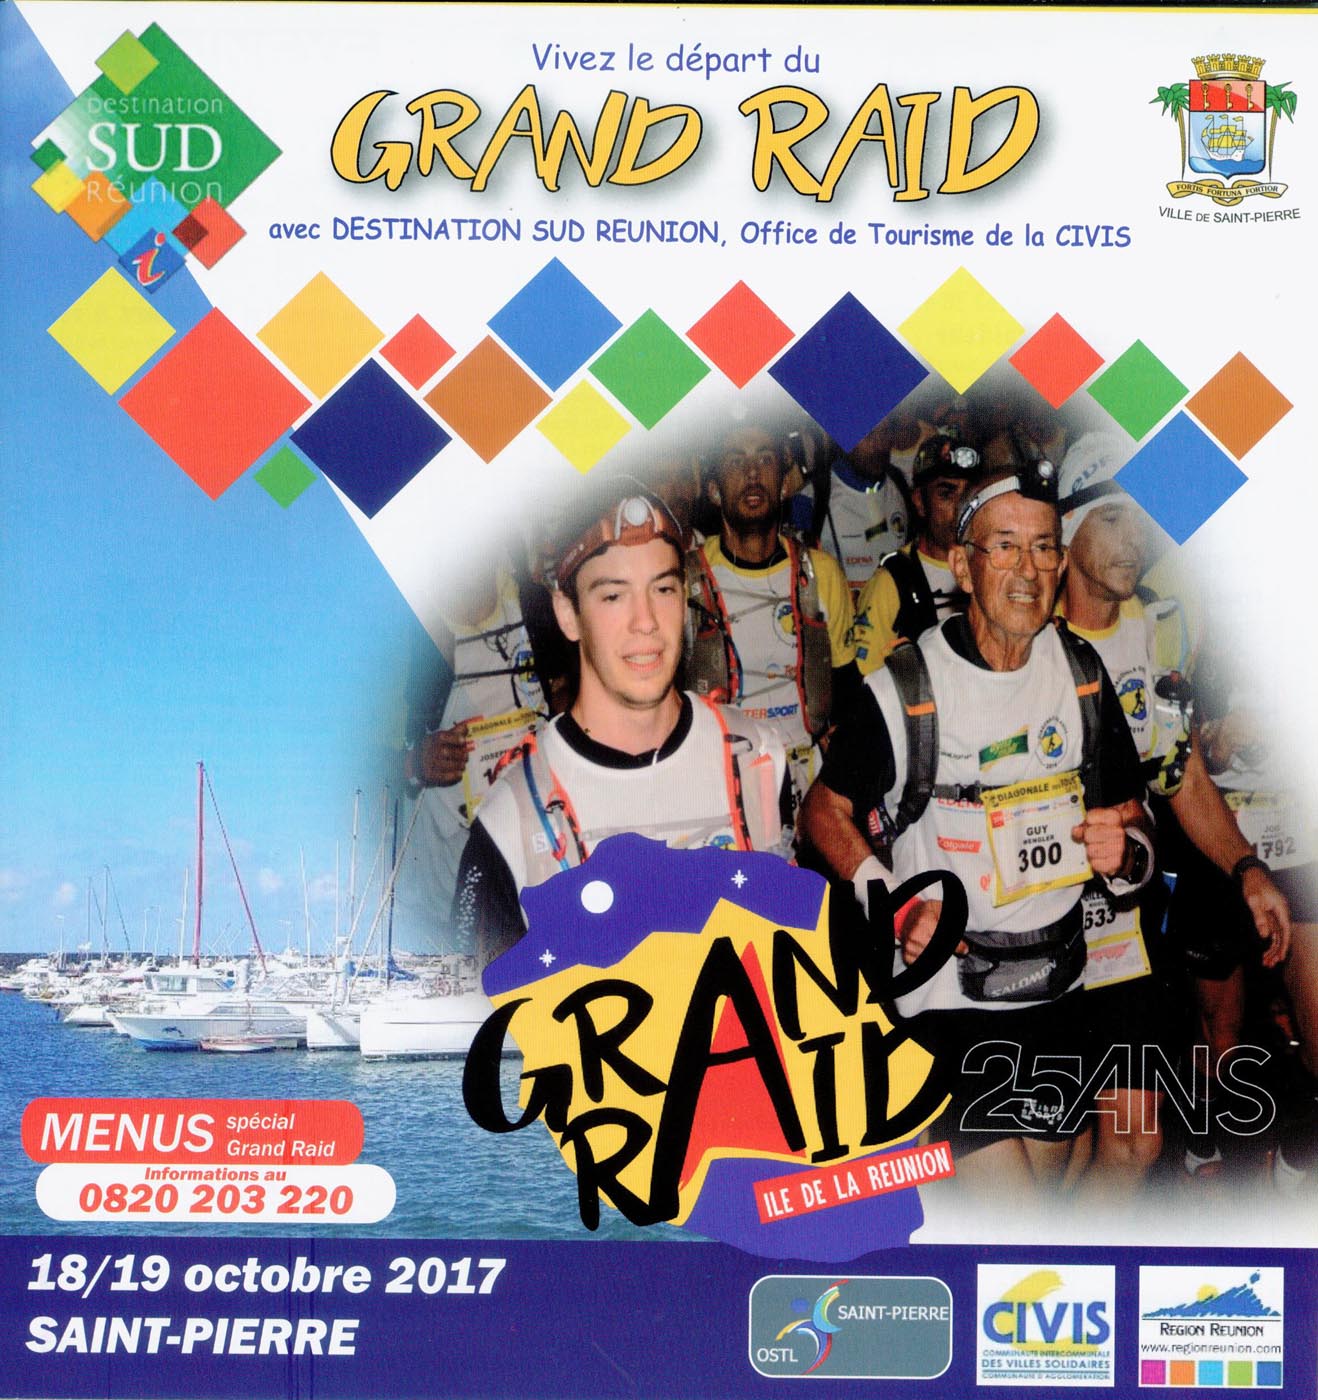 Grand Raid 2017: Saint-Pierre en fête